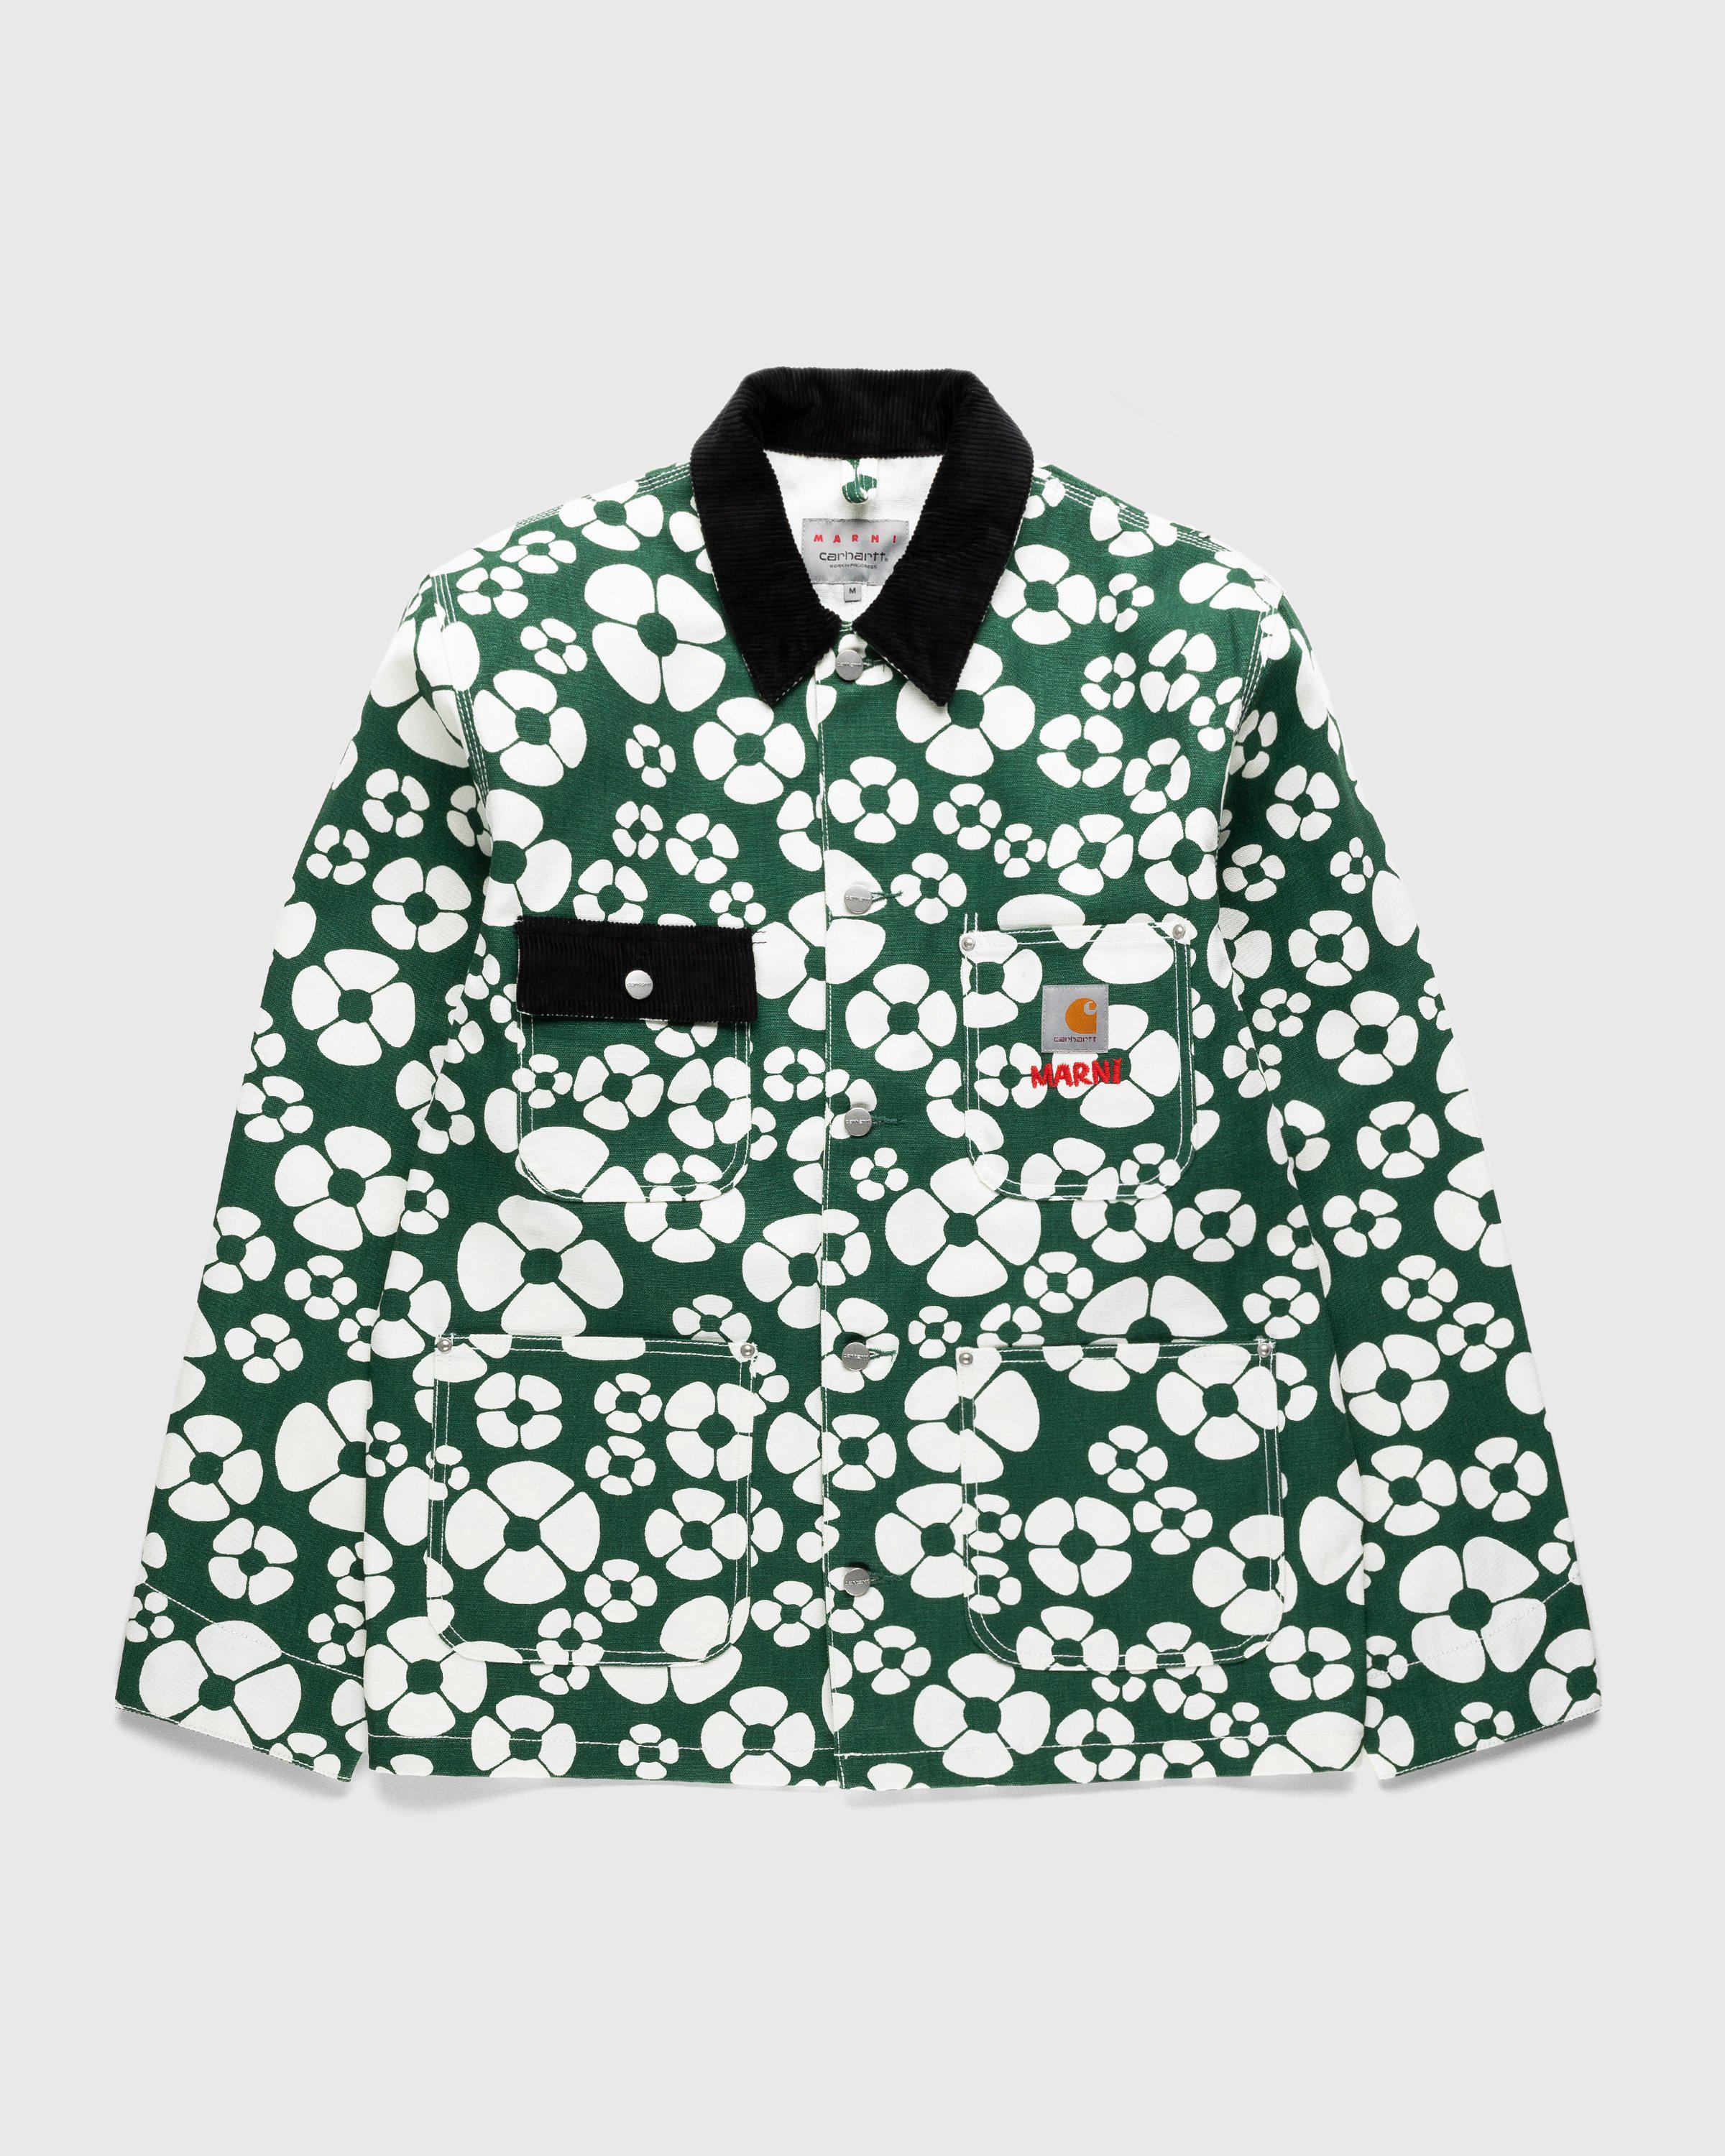 Marni x Carhartt WIP – Floral Jacket Green by MARNI X CARHARTT WIP